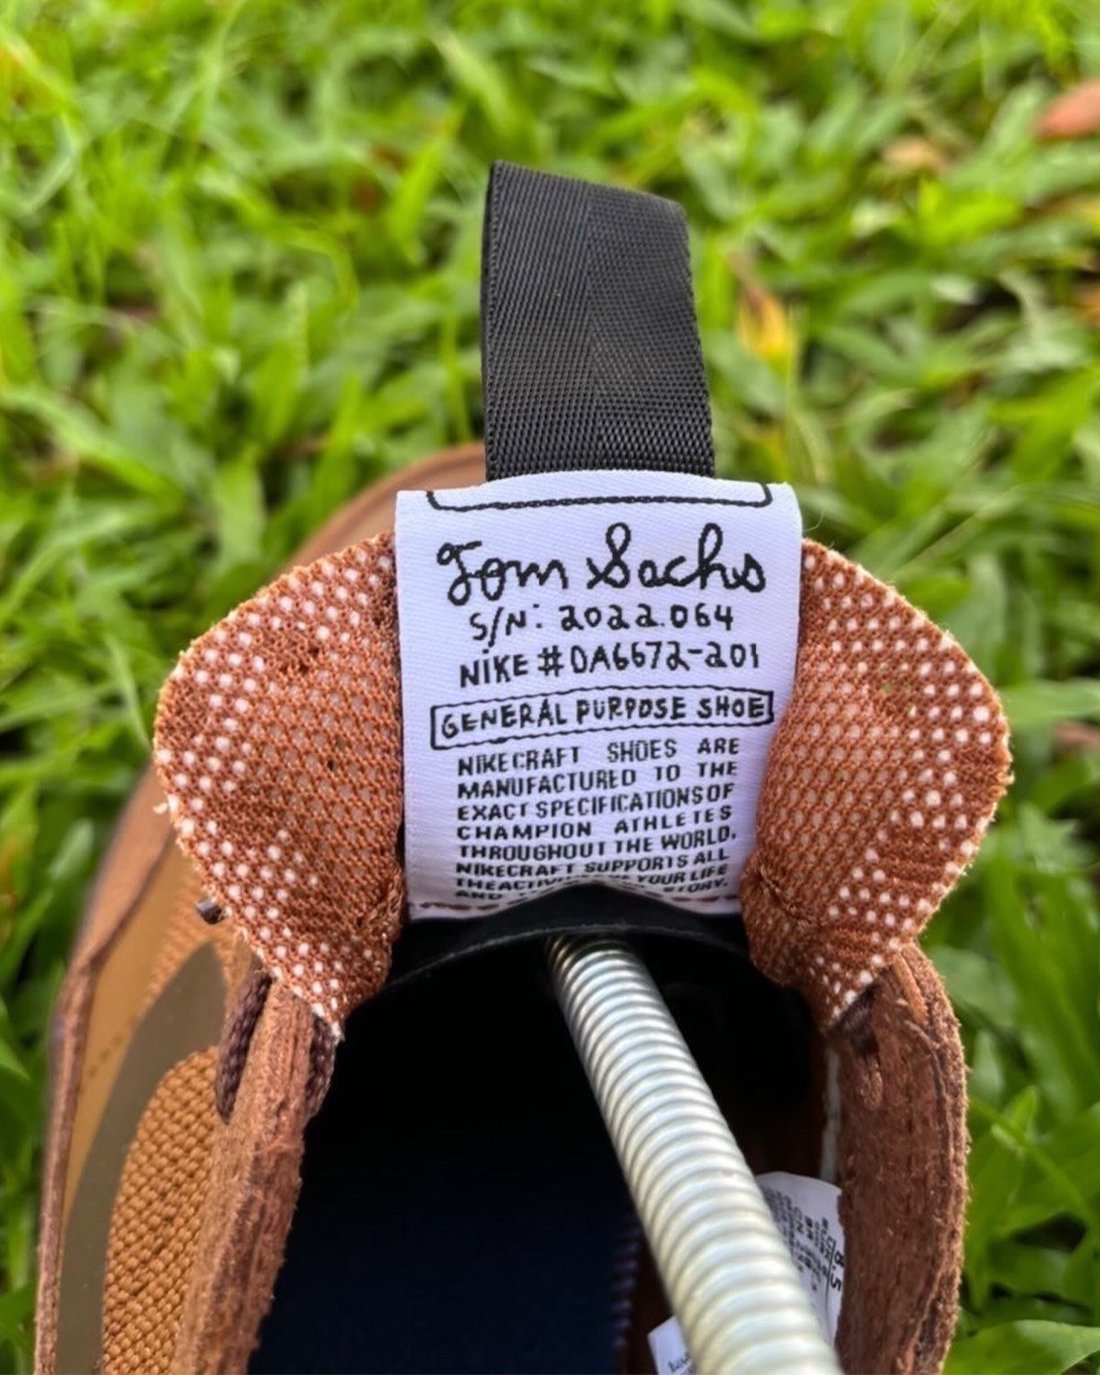 Tom Sachs, Nike General Purpose, NIKE